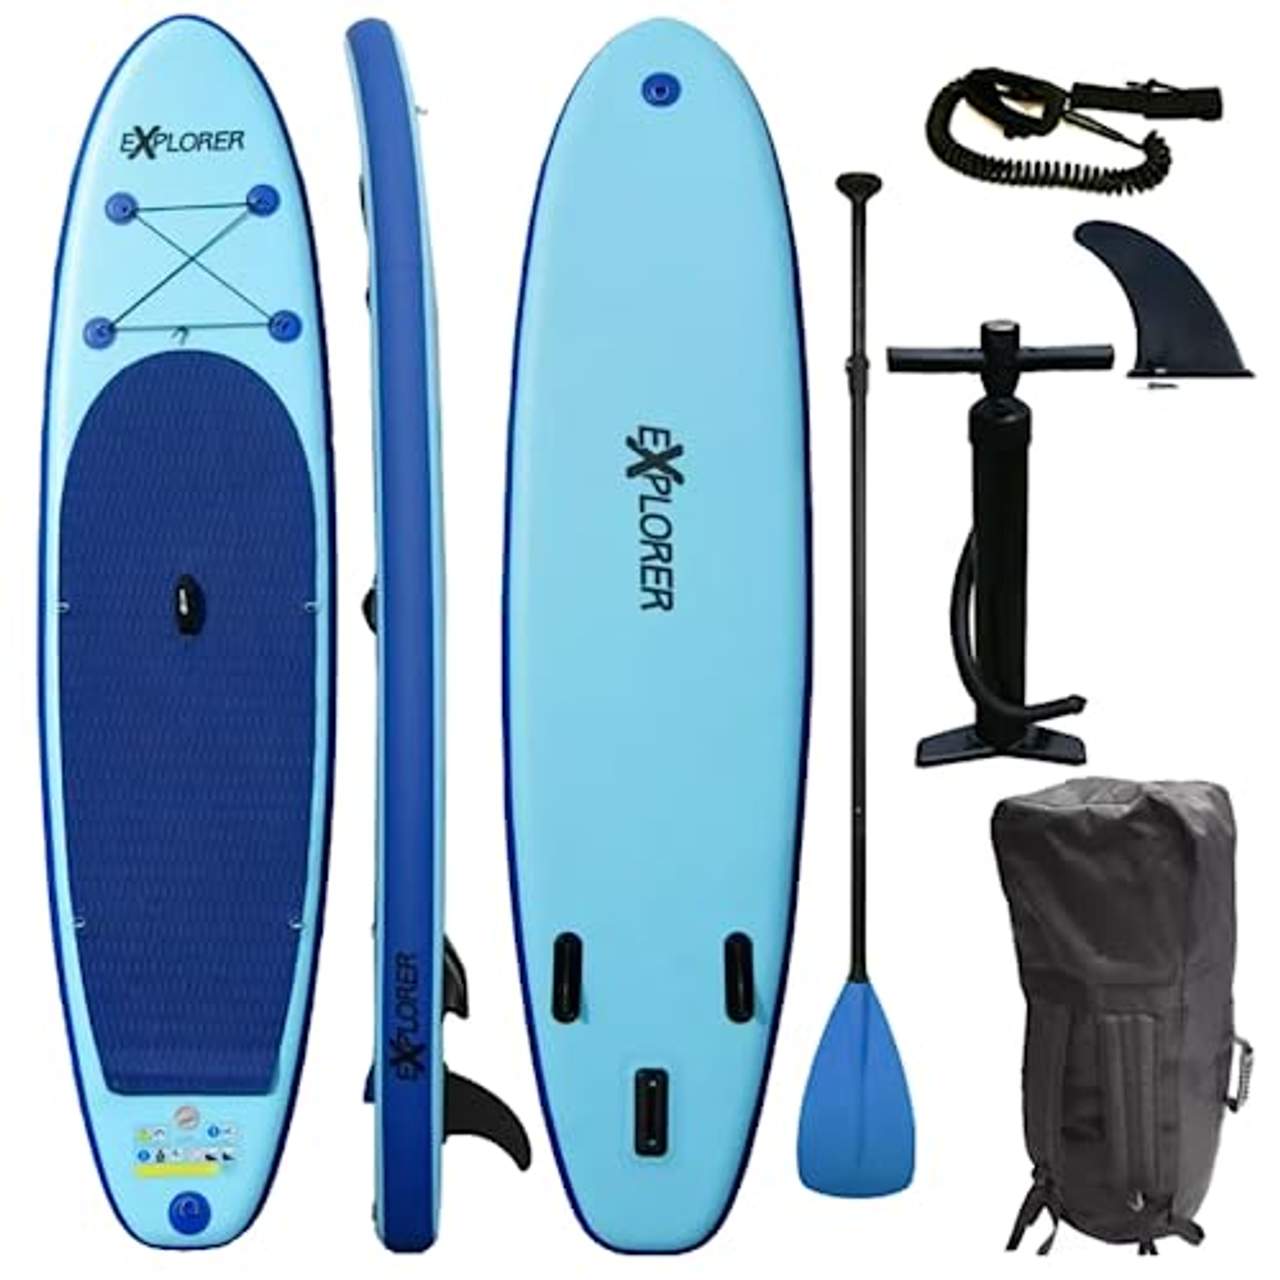 2X 320 Explorer SUP I Blau I Robustes PVC-Gewebe-Surfboard I Allround-Form